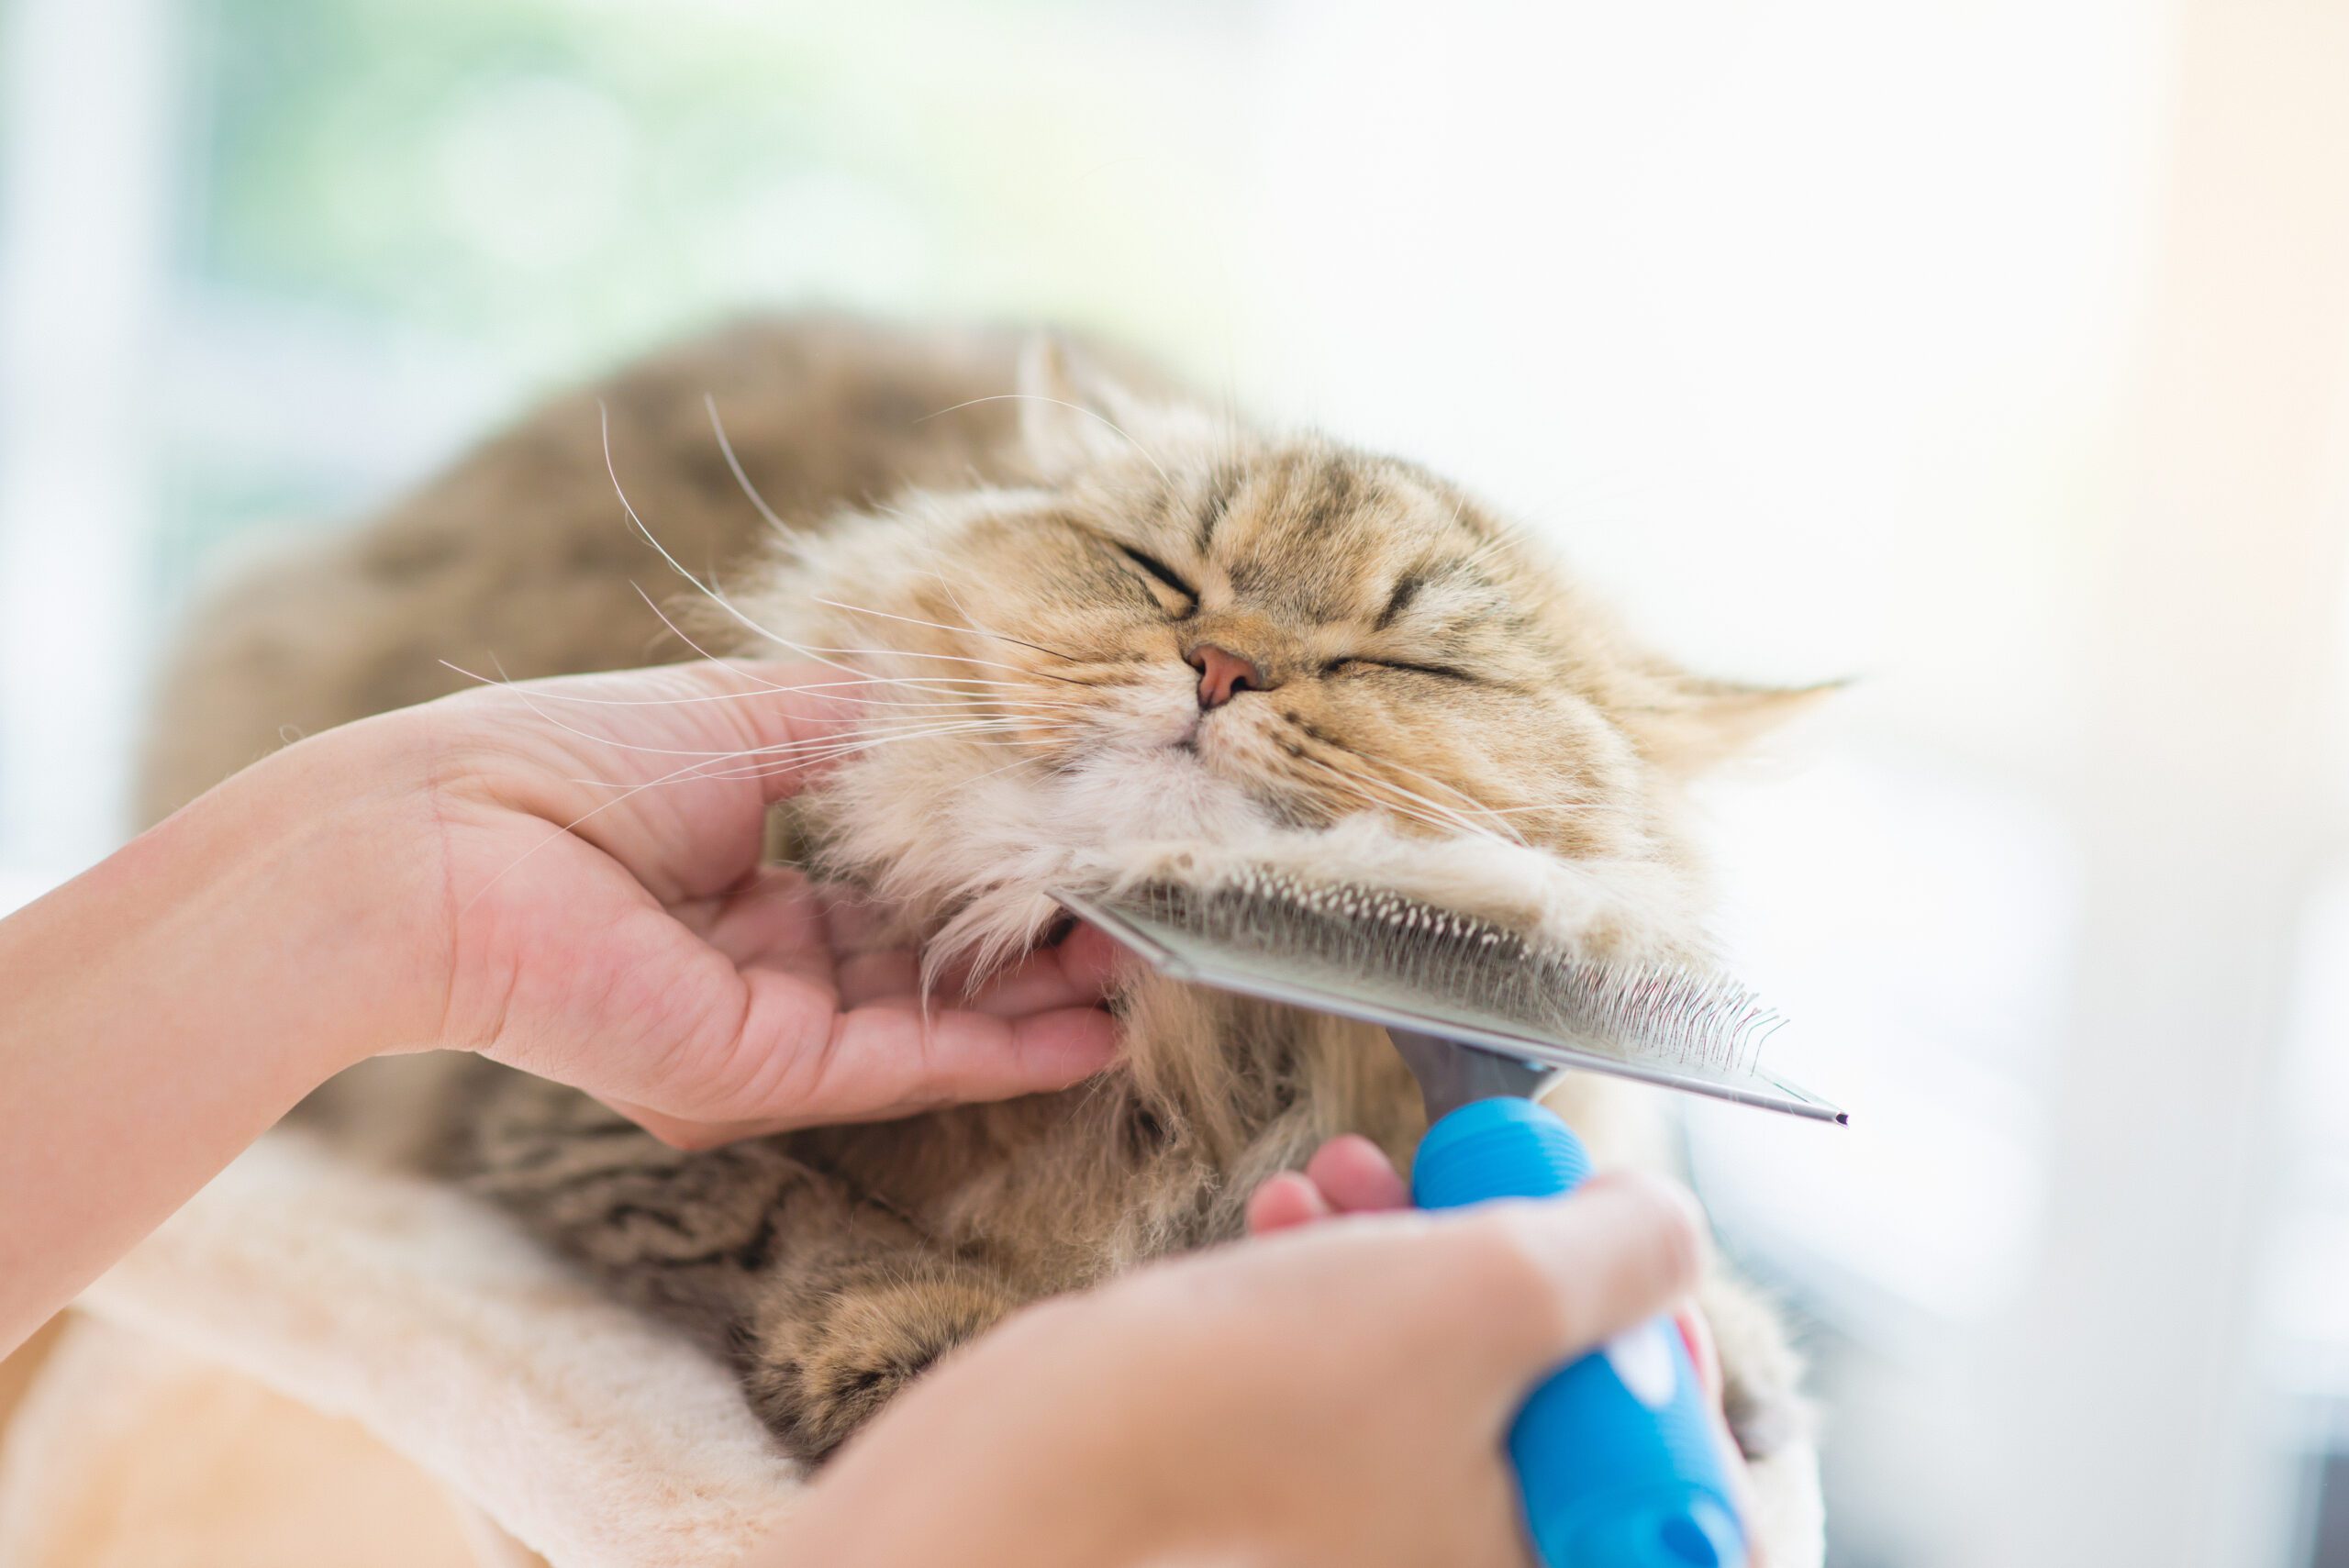 Persian Cat Grooming